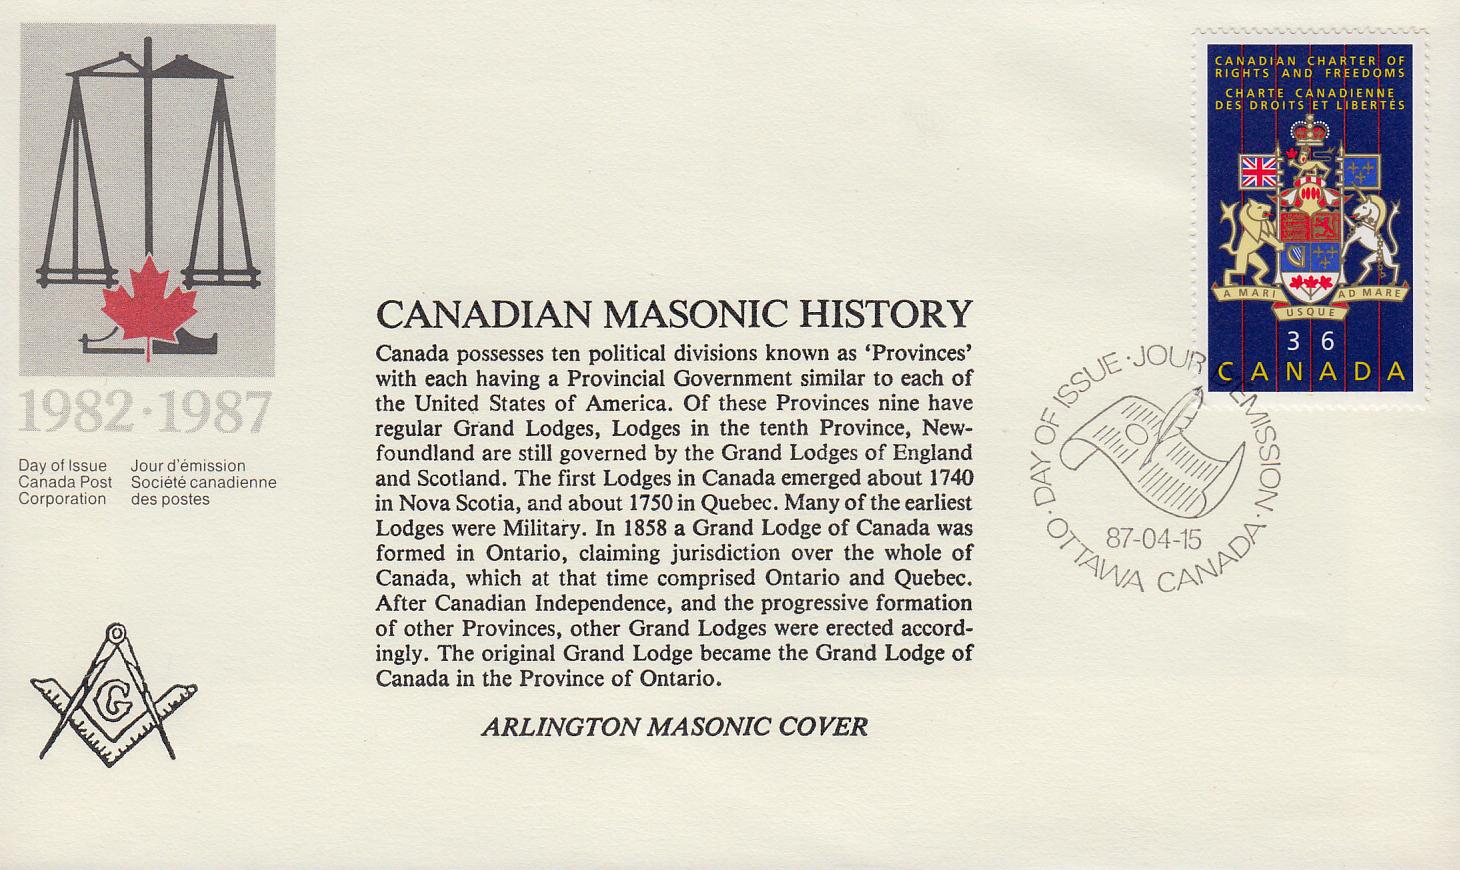 Arlington Masonic Cover 15.04.87